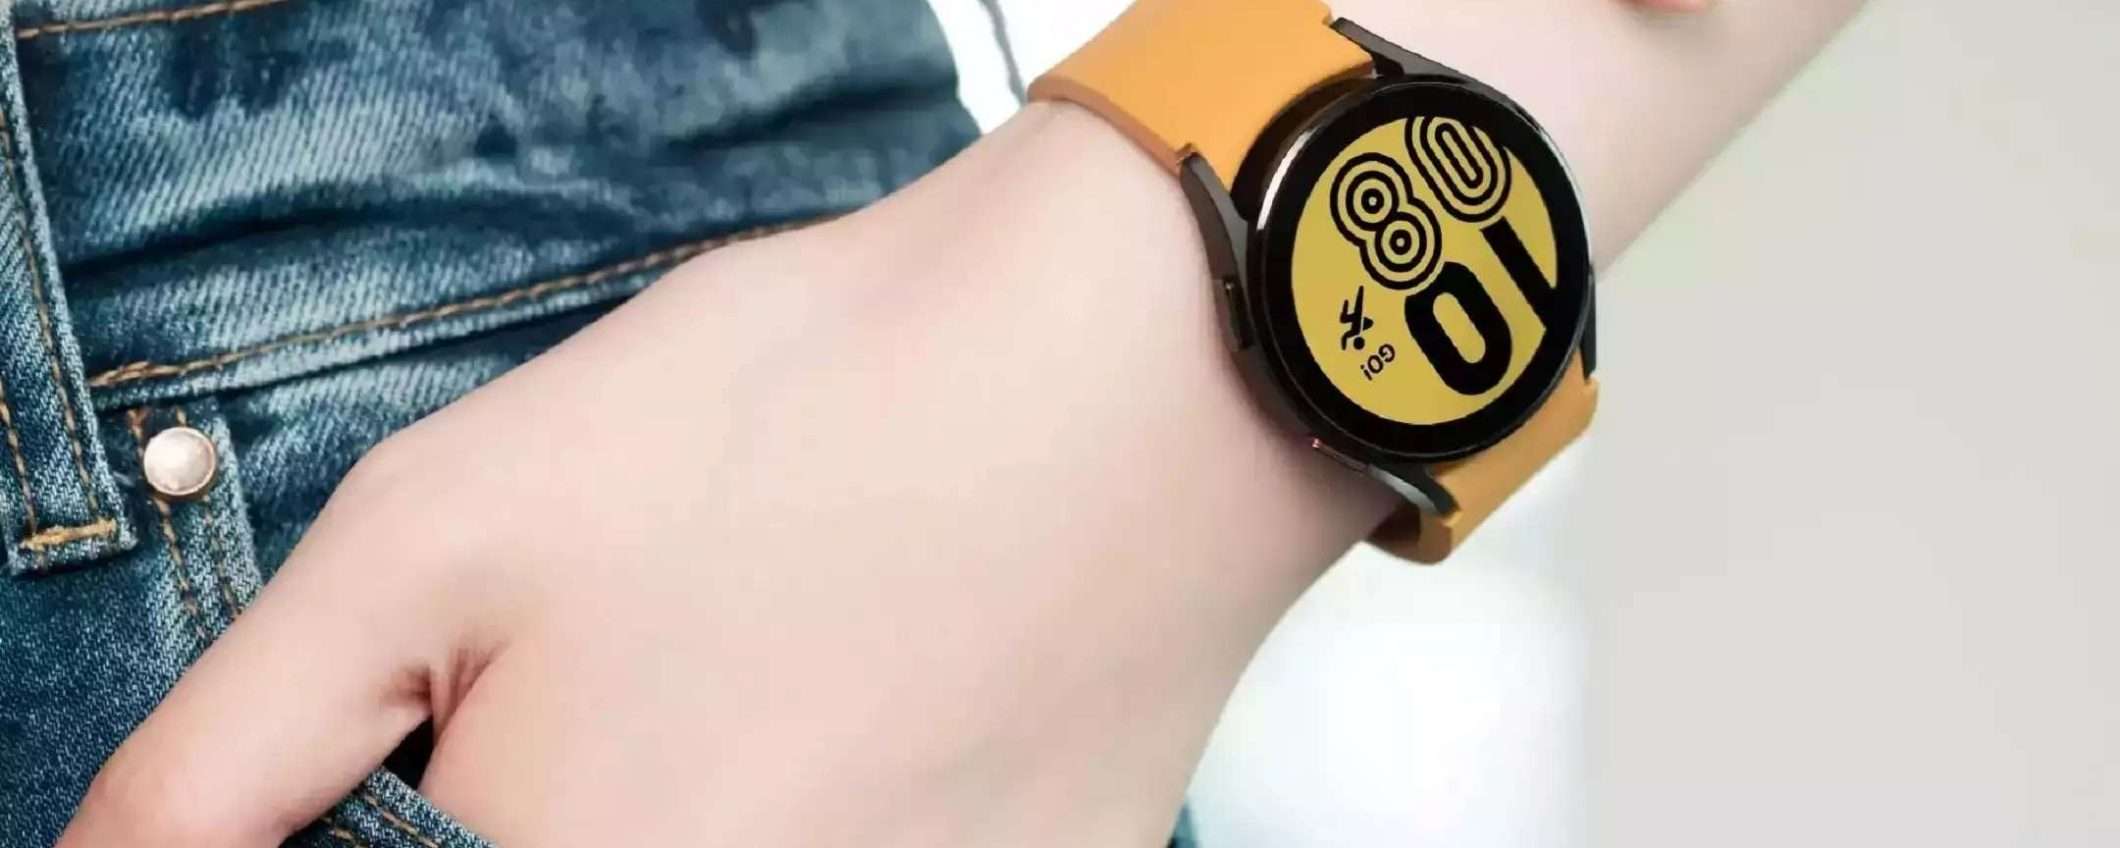 Samsung Galaxy Watch 4: in offerta su Amazon si conferma il BEST BUY tra gli smartwatch